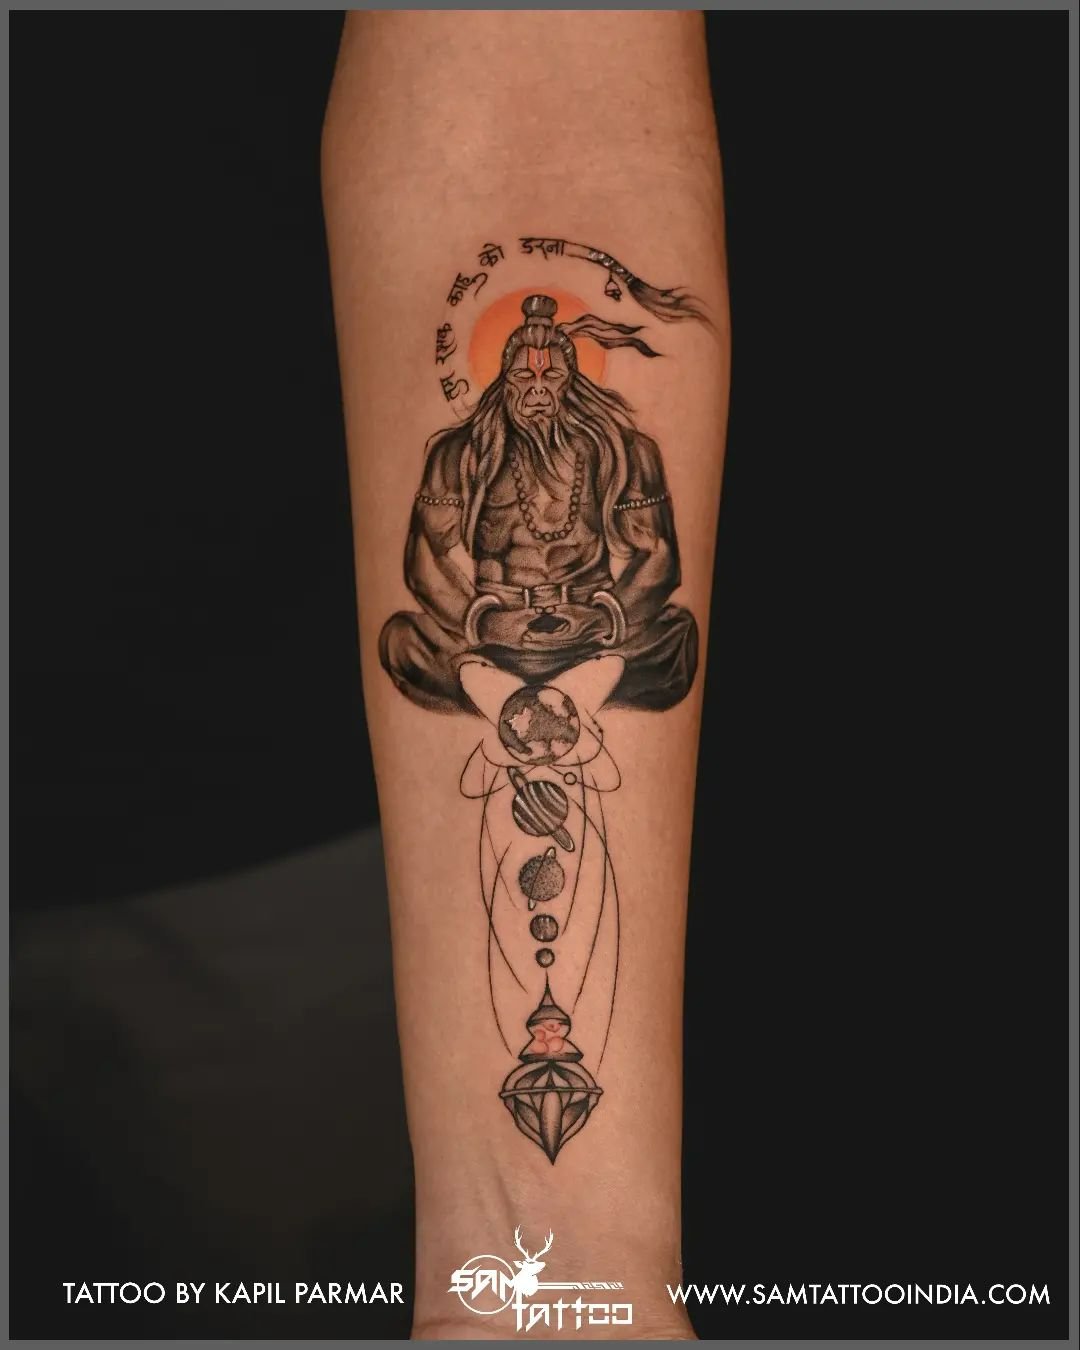 Share more than 73 hanuman hand tattoo - in.cdgdbentre